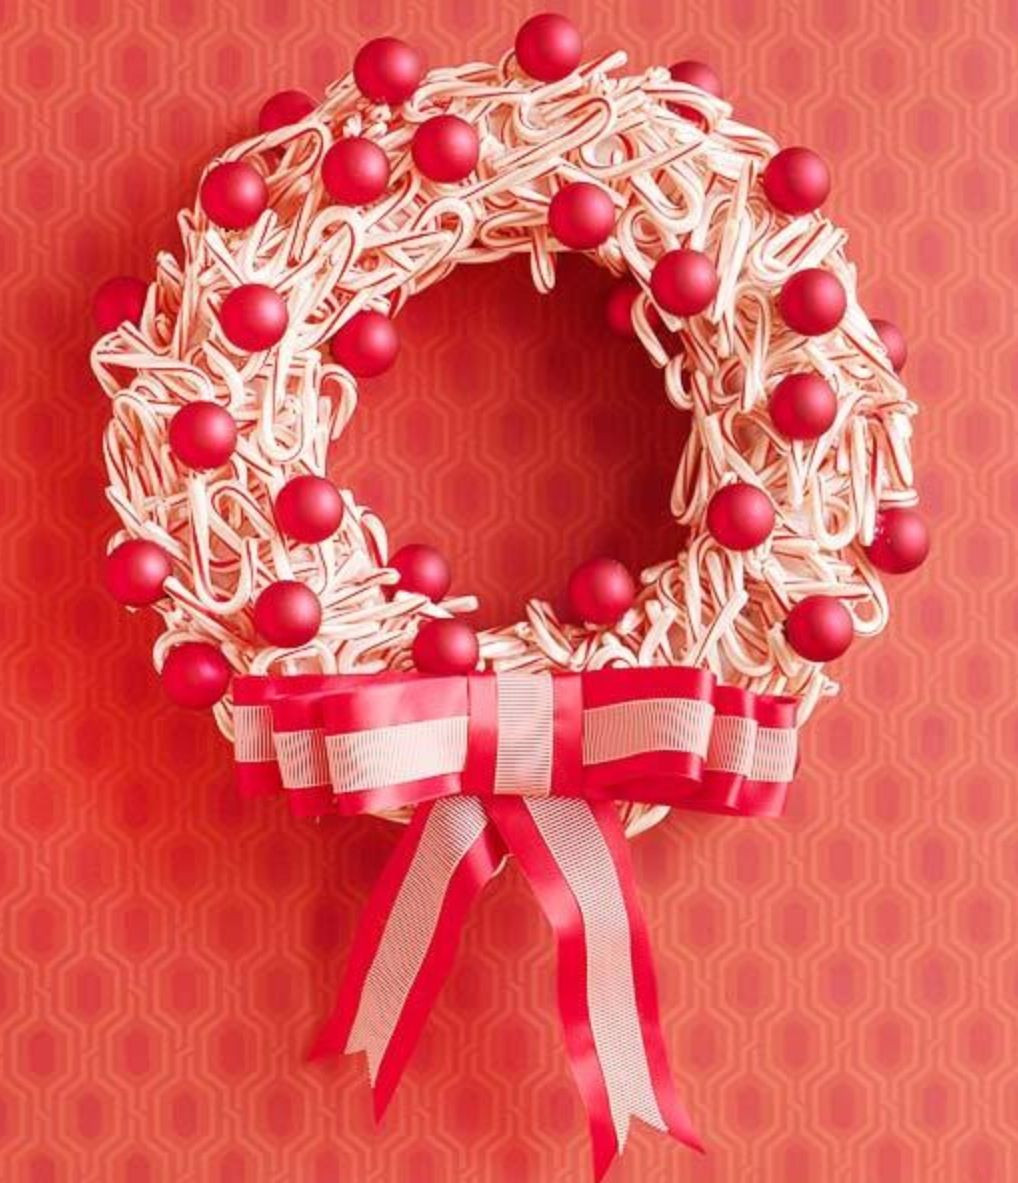 Christmas Wreath Candy
 Candy cane wreath Christmas